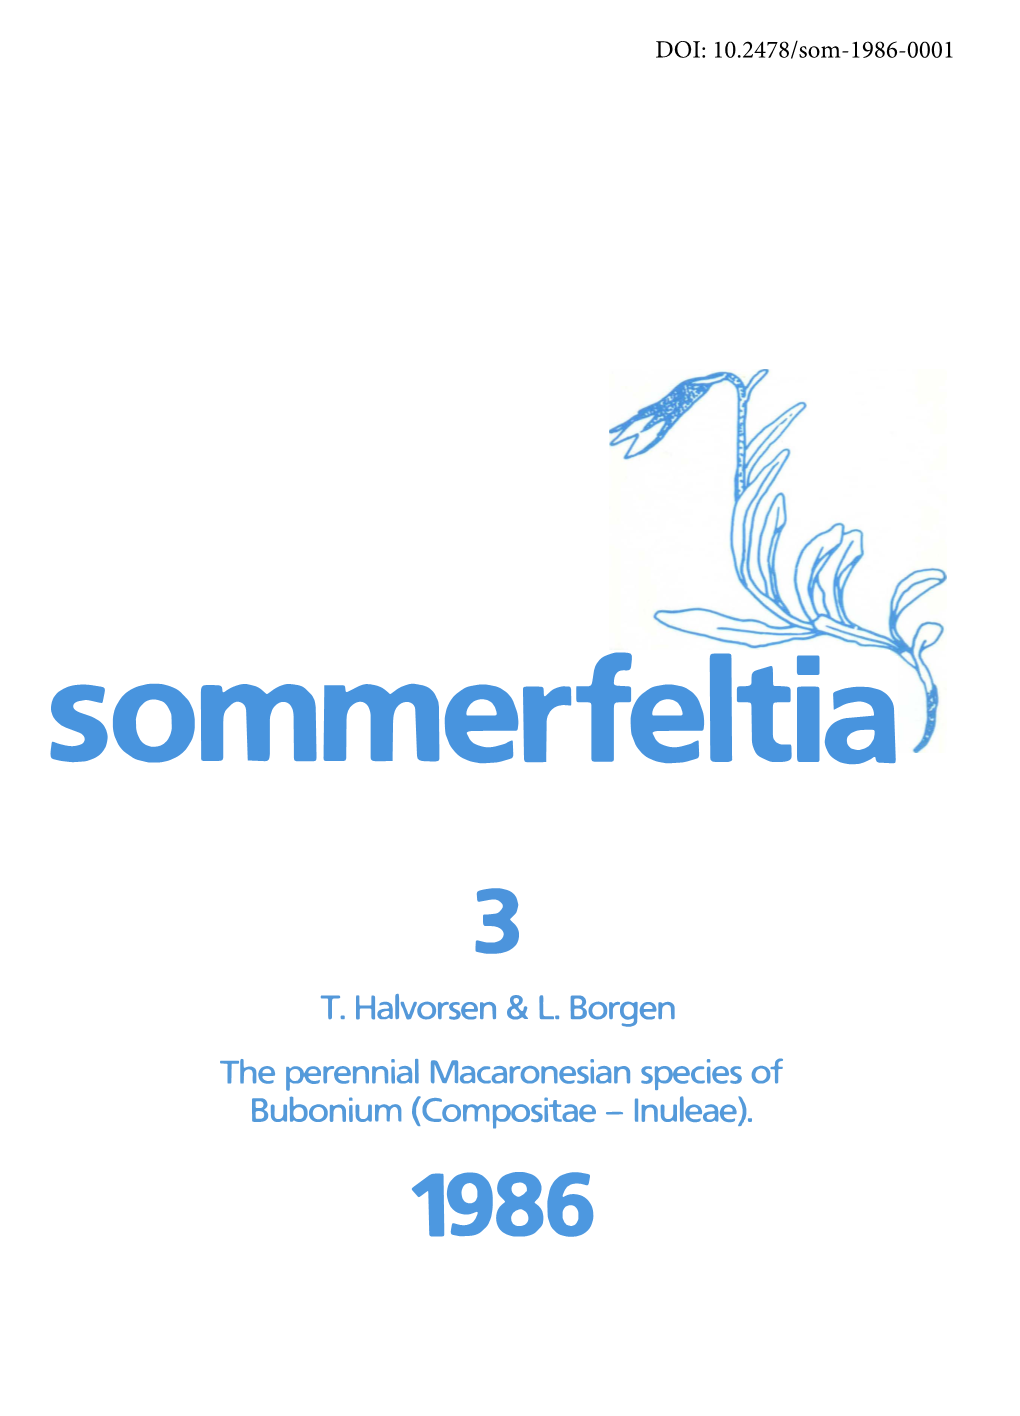 Sommerfeltia 3 T